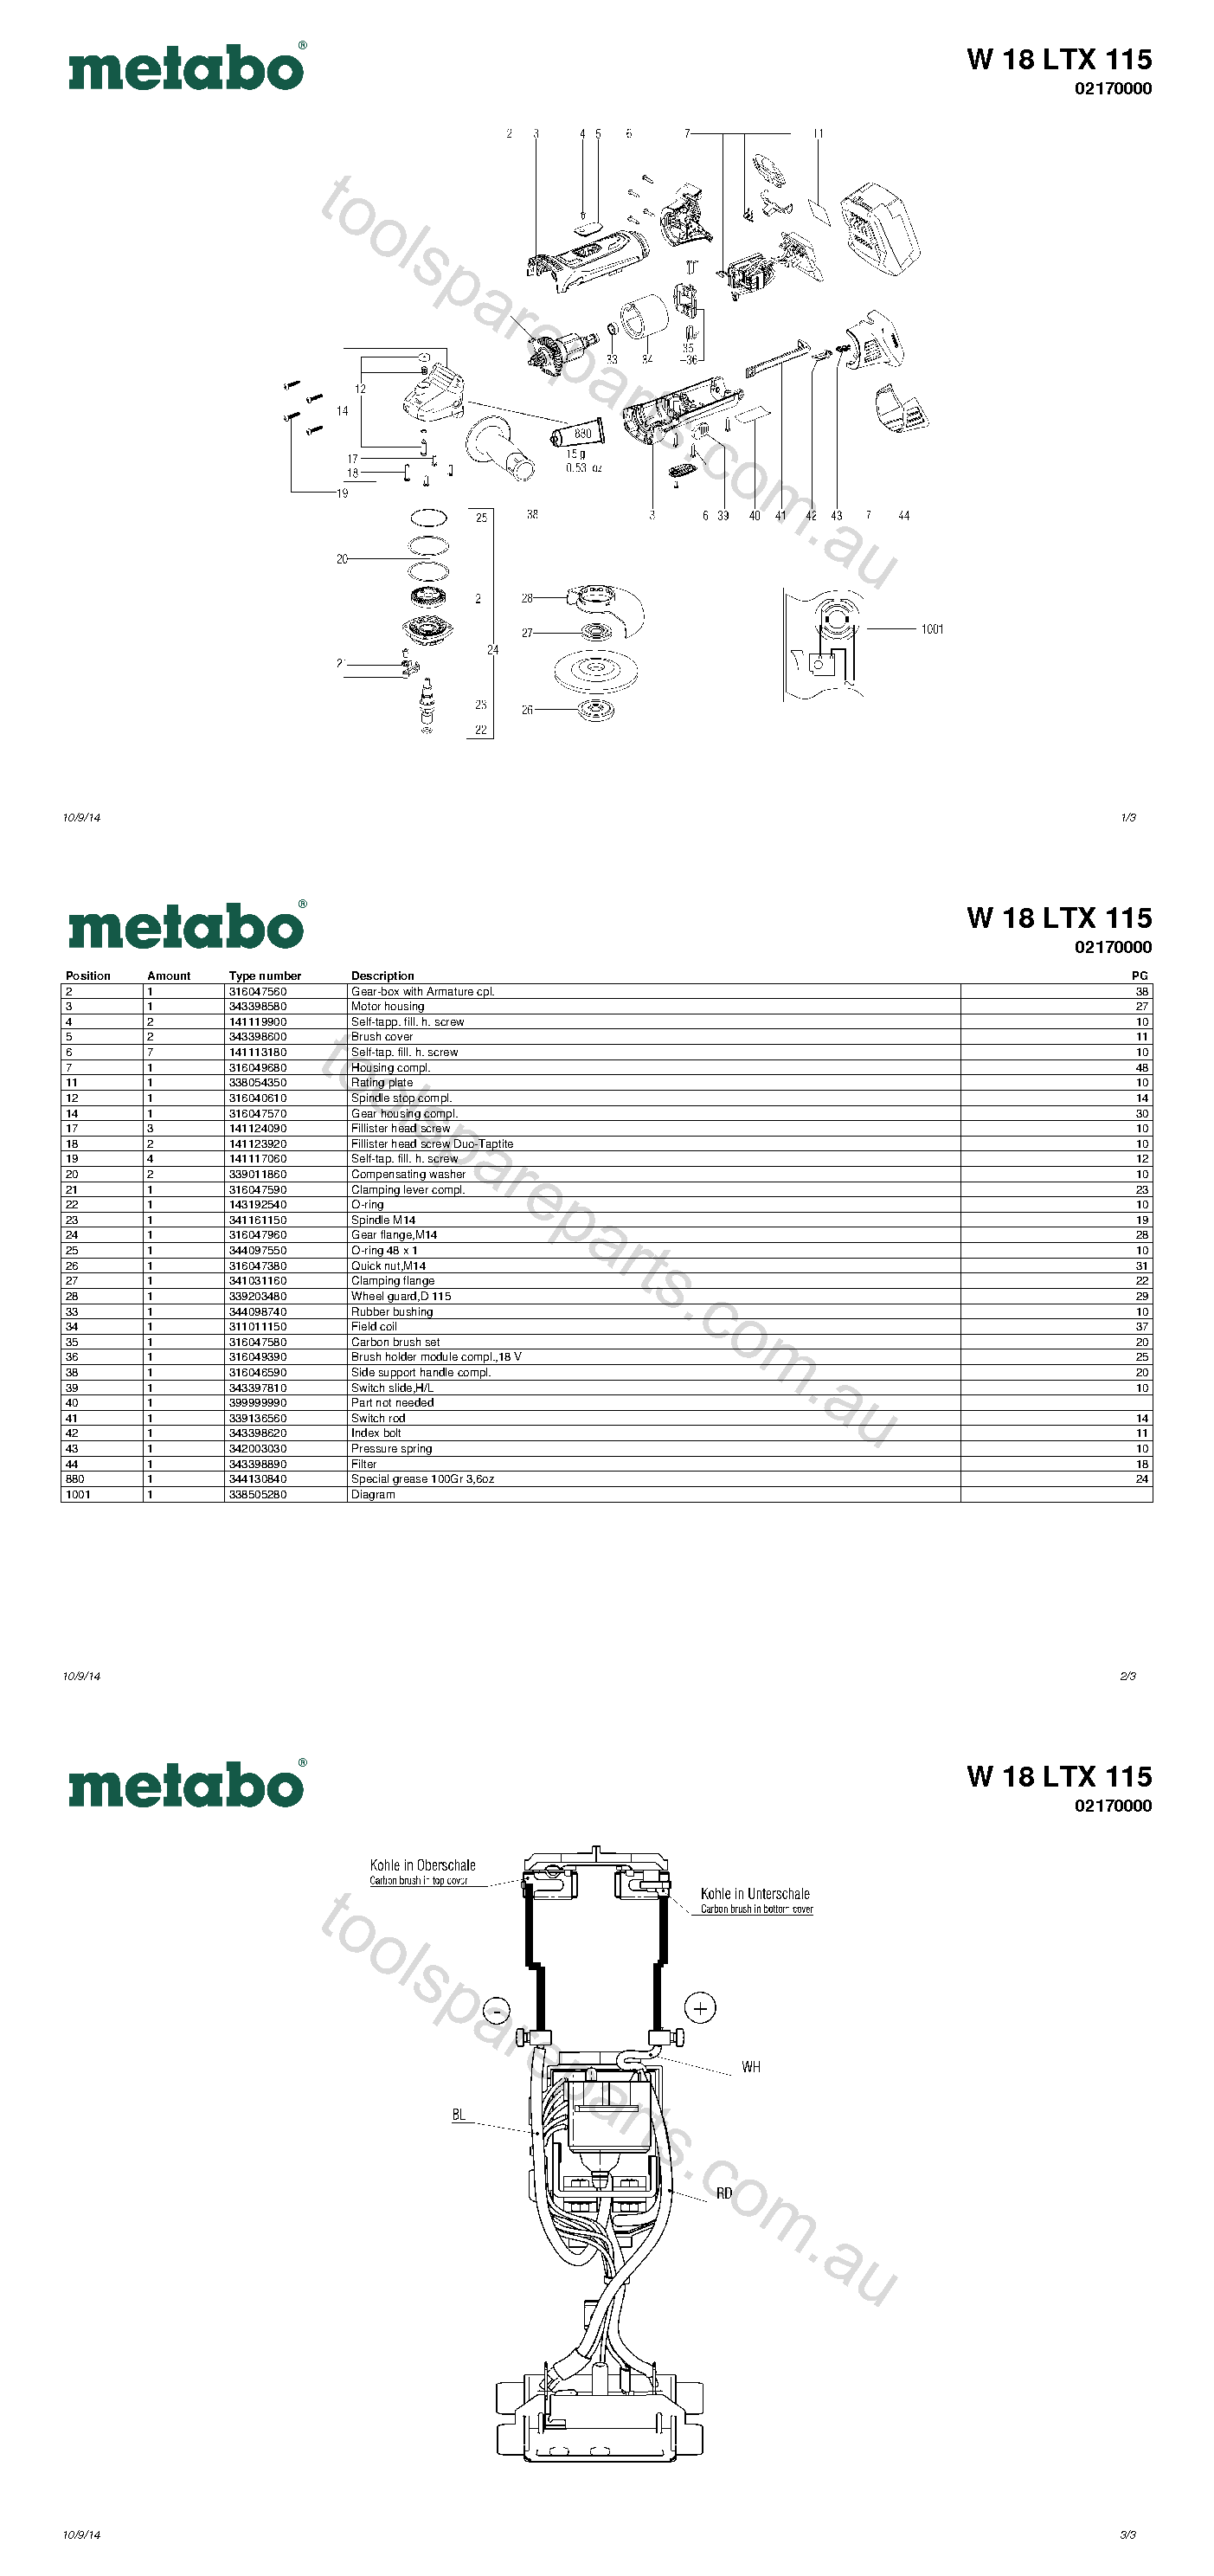 Metabo W 18 LTX 115 02170000  Diagram 1